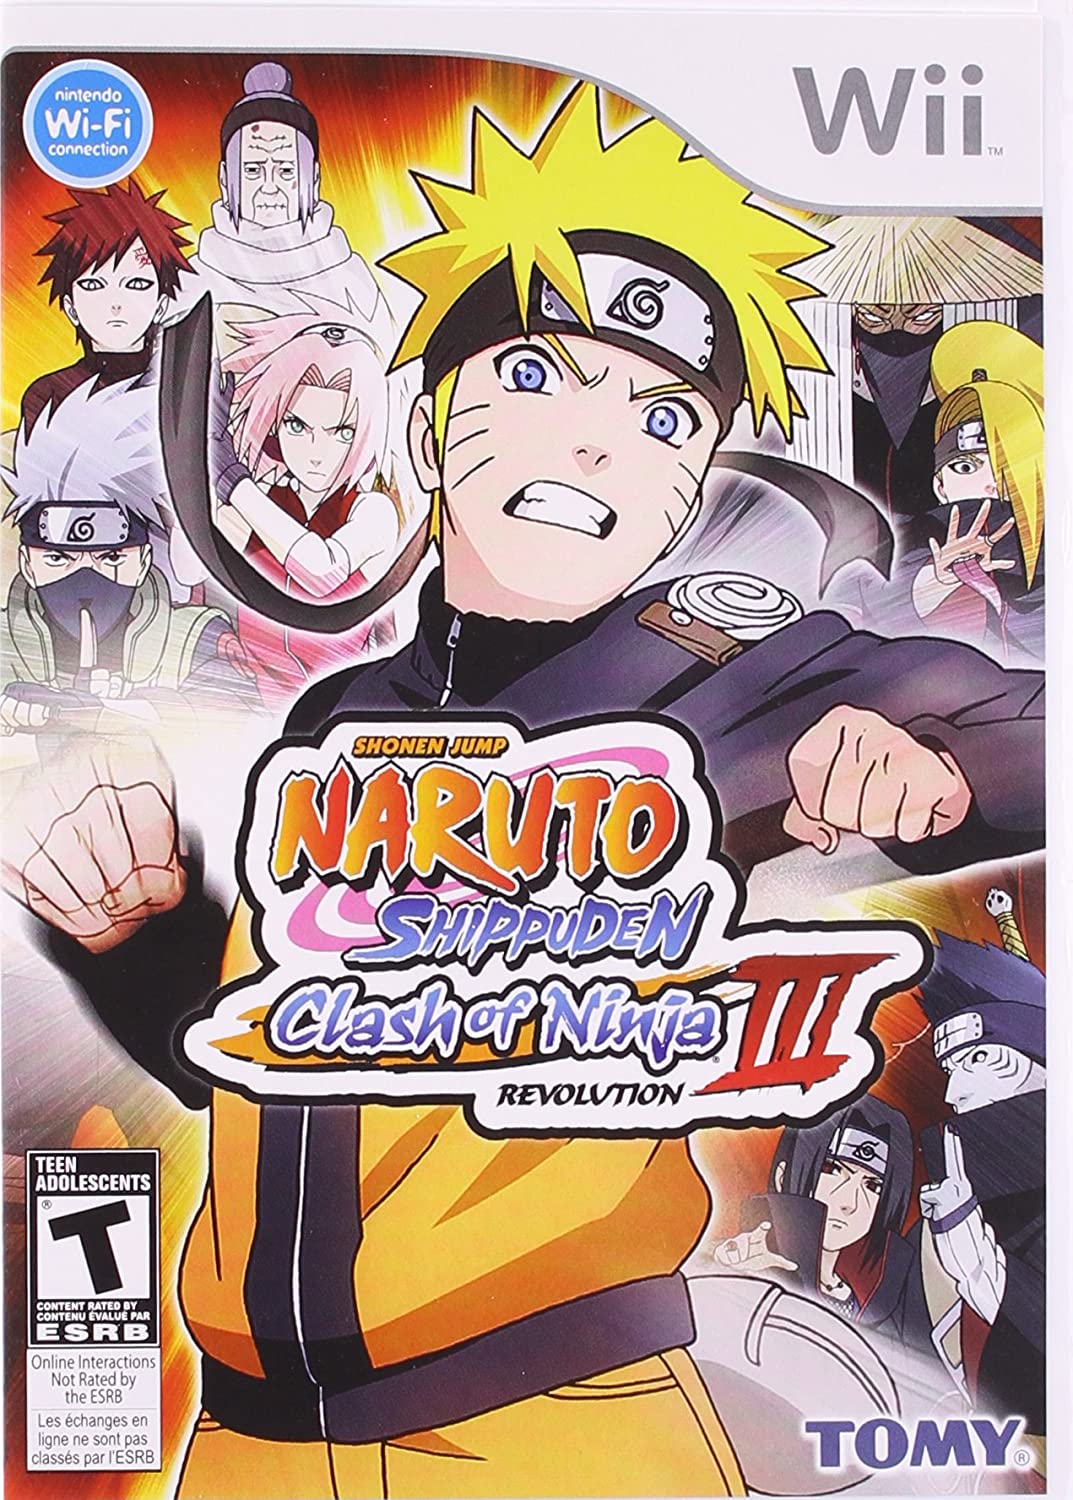 Naruto Shippuden: Clash of Ninja Revolution 3 player count stats